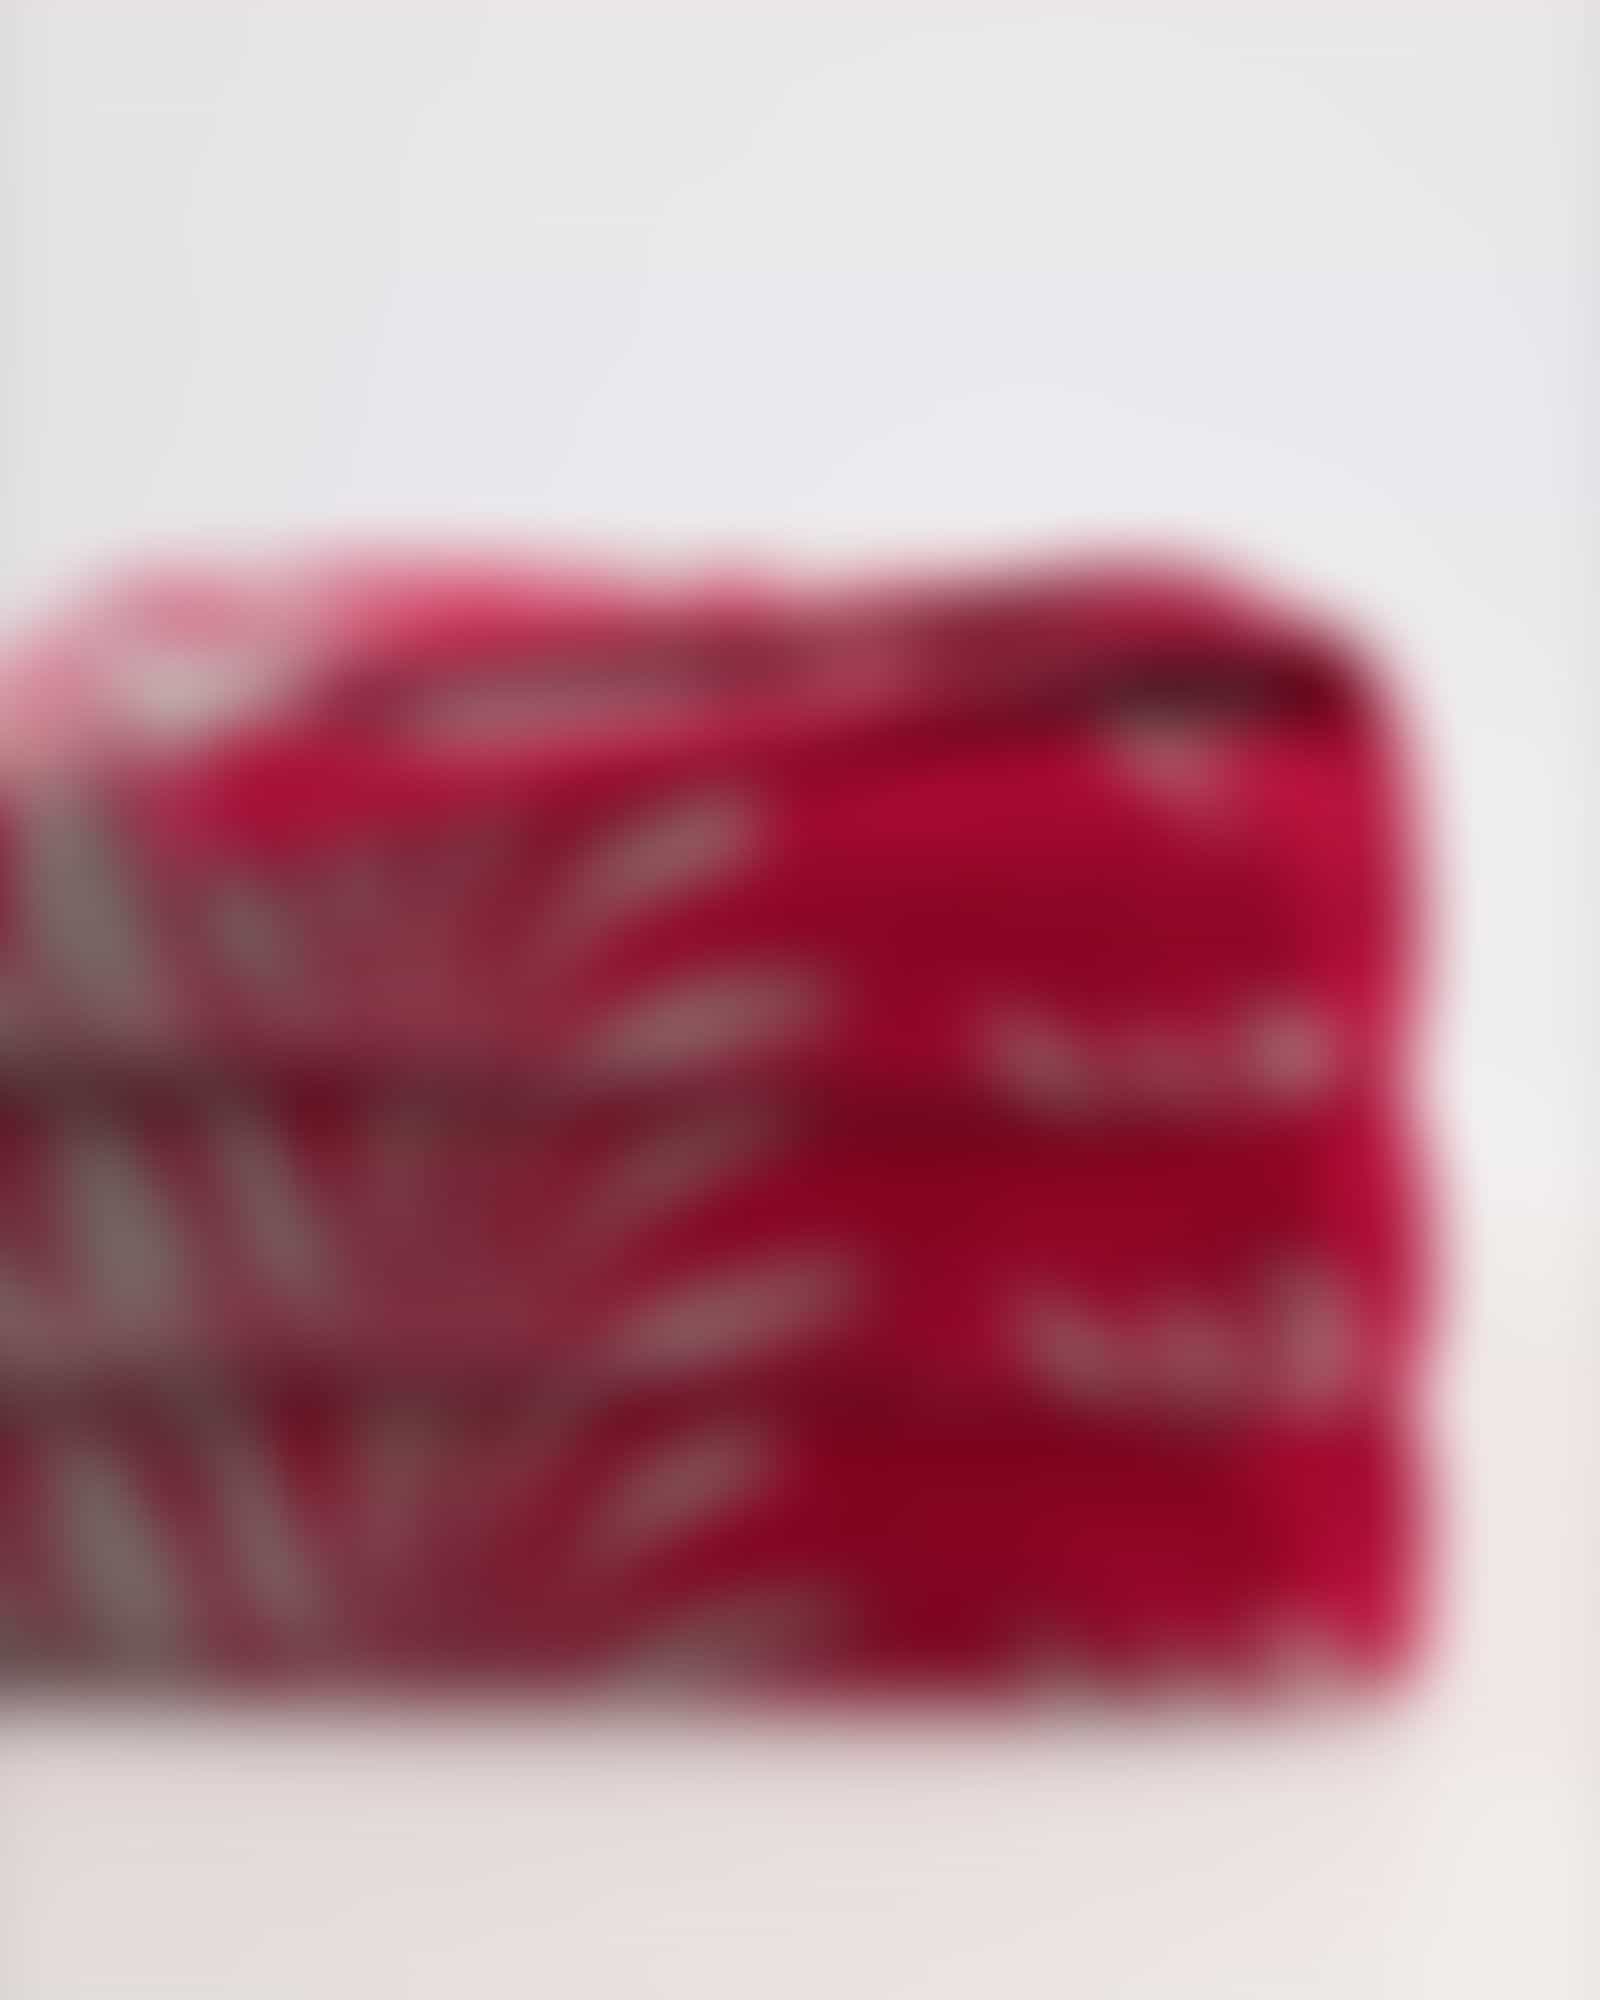 Cawö Handtücher Luxury Home Two-Tone Edition Floral 638 - Farbe: bordeaux - 22 Duschtuch 80x150 cm